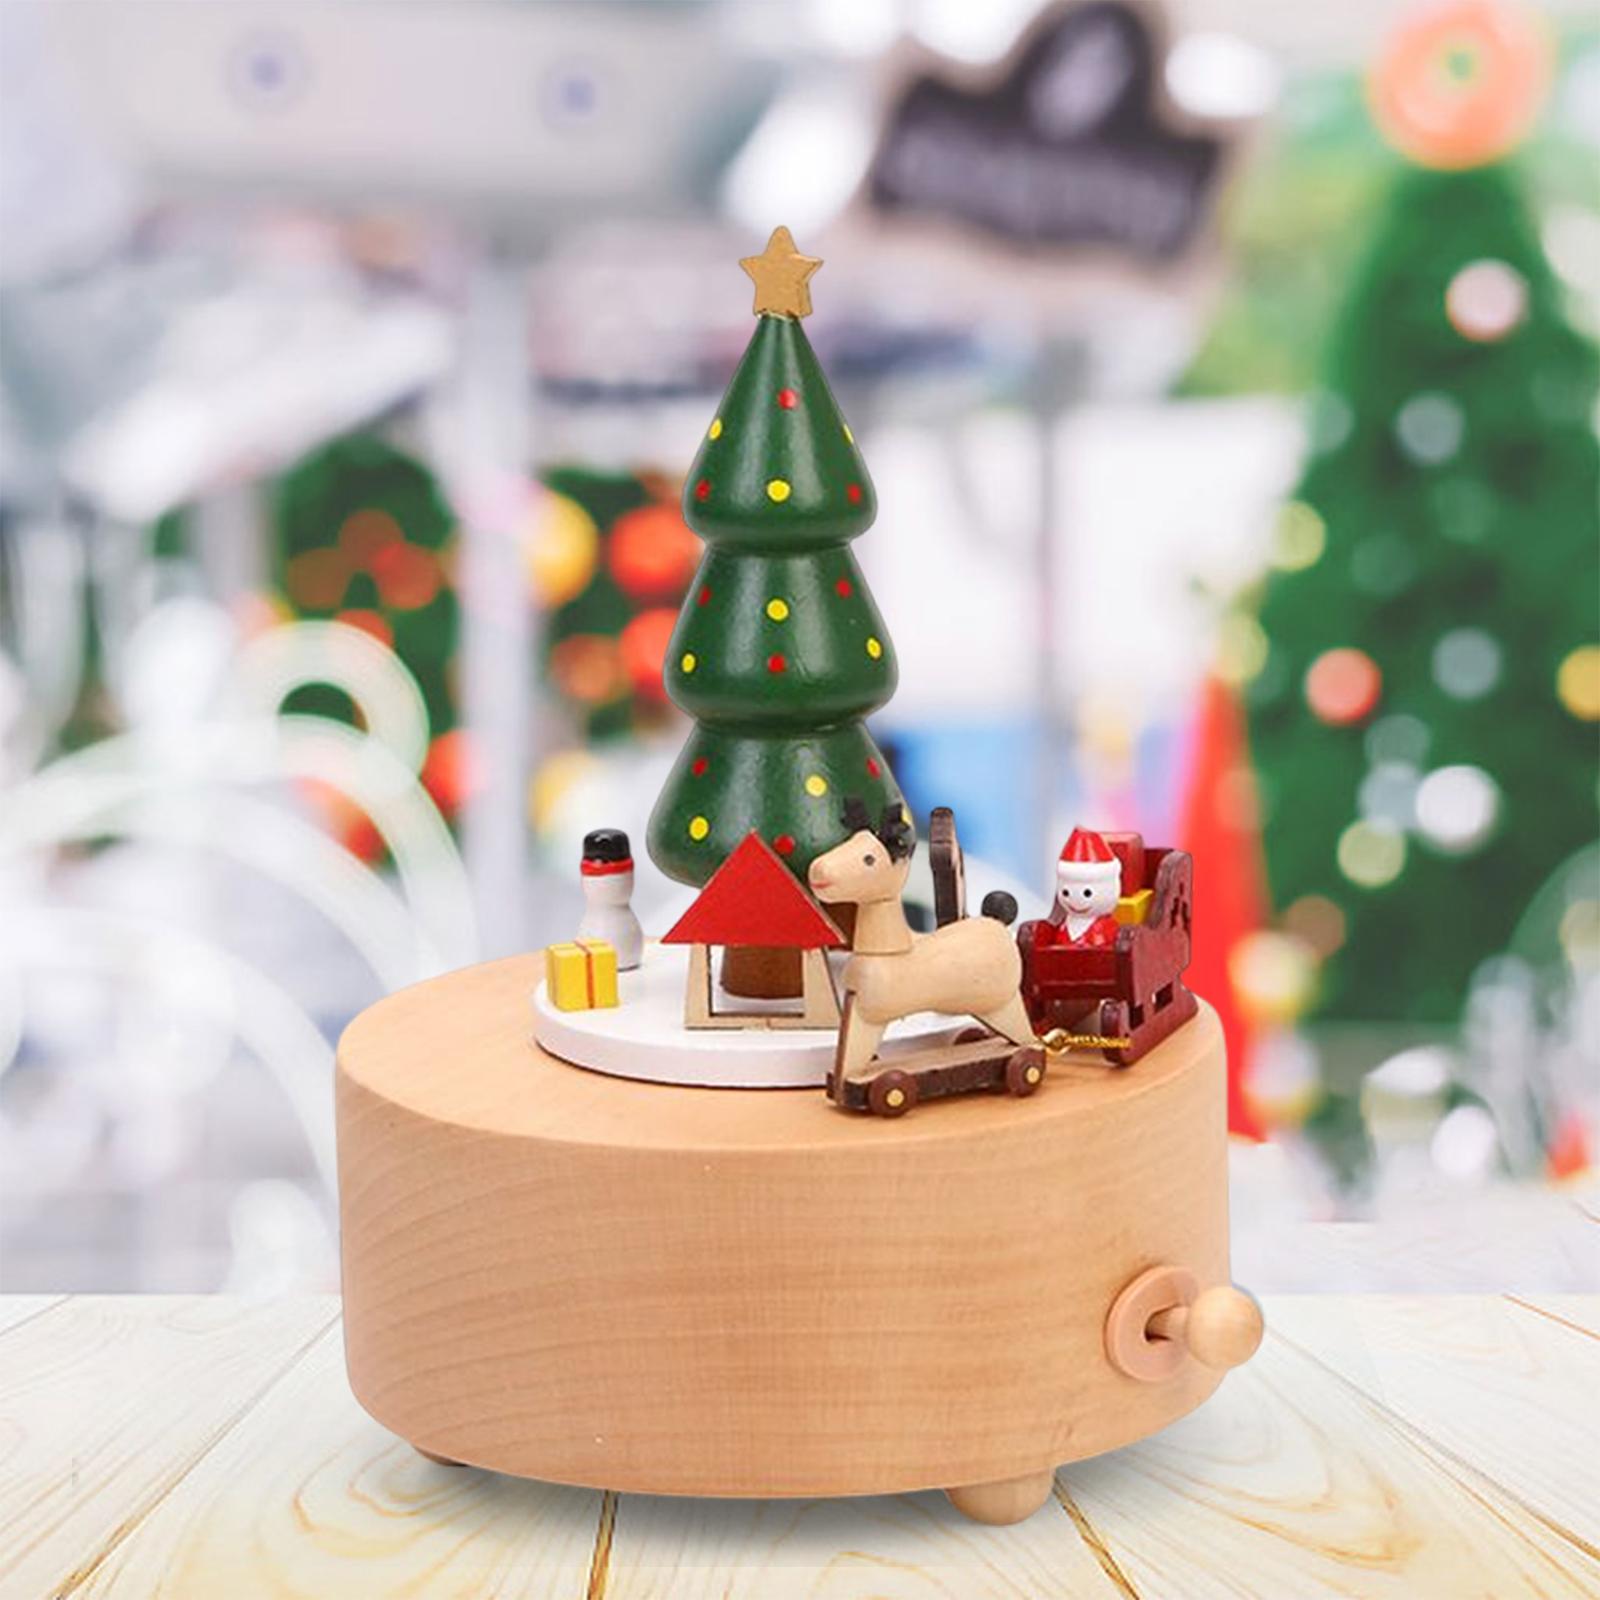 Portable Christmas Music Box Rotatable Carousel for Desktop Party Decor Tree